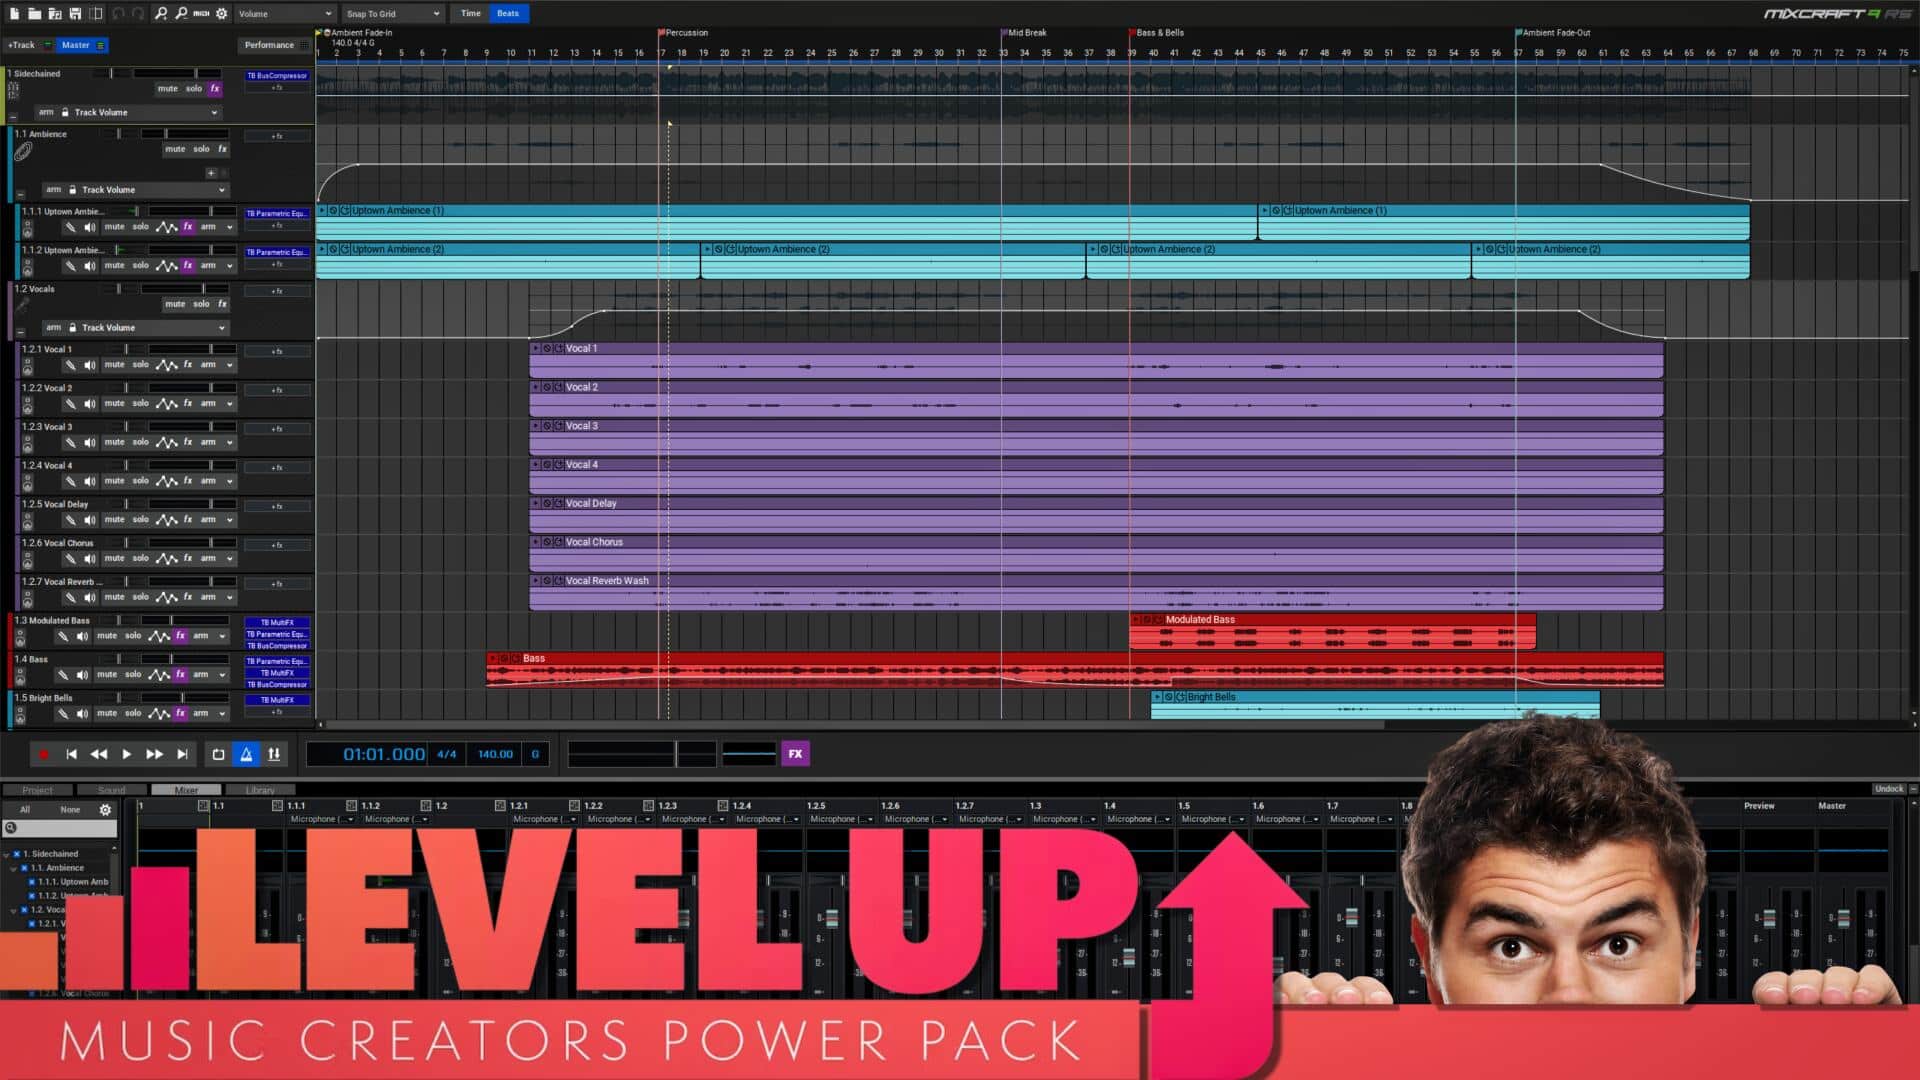 Level Up Music Creators Power Pack Humble Bundle